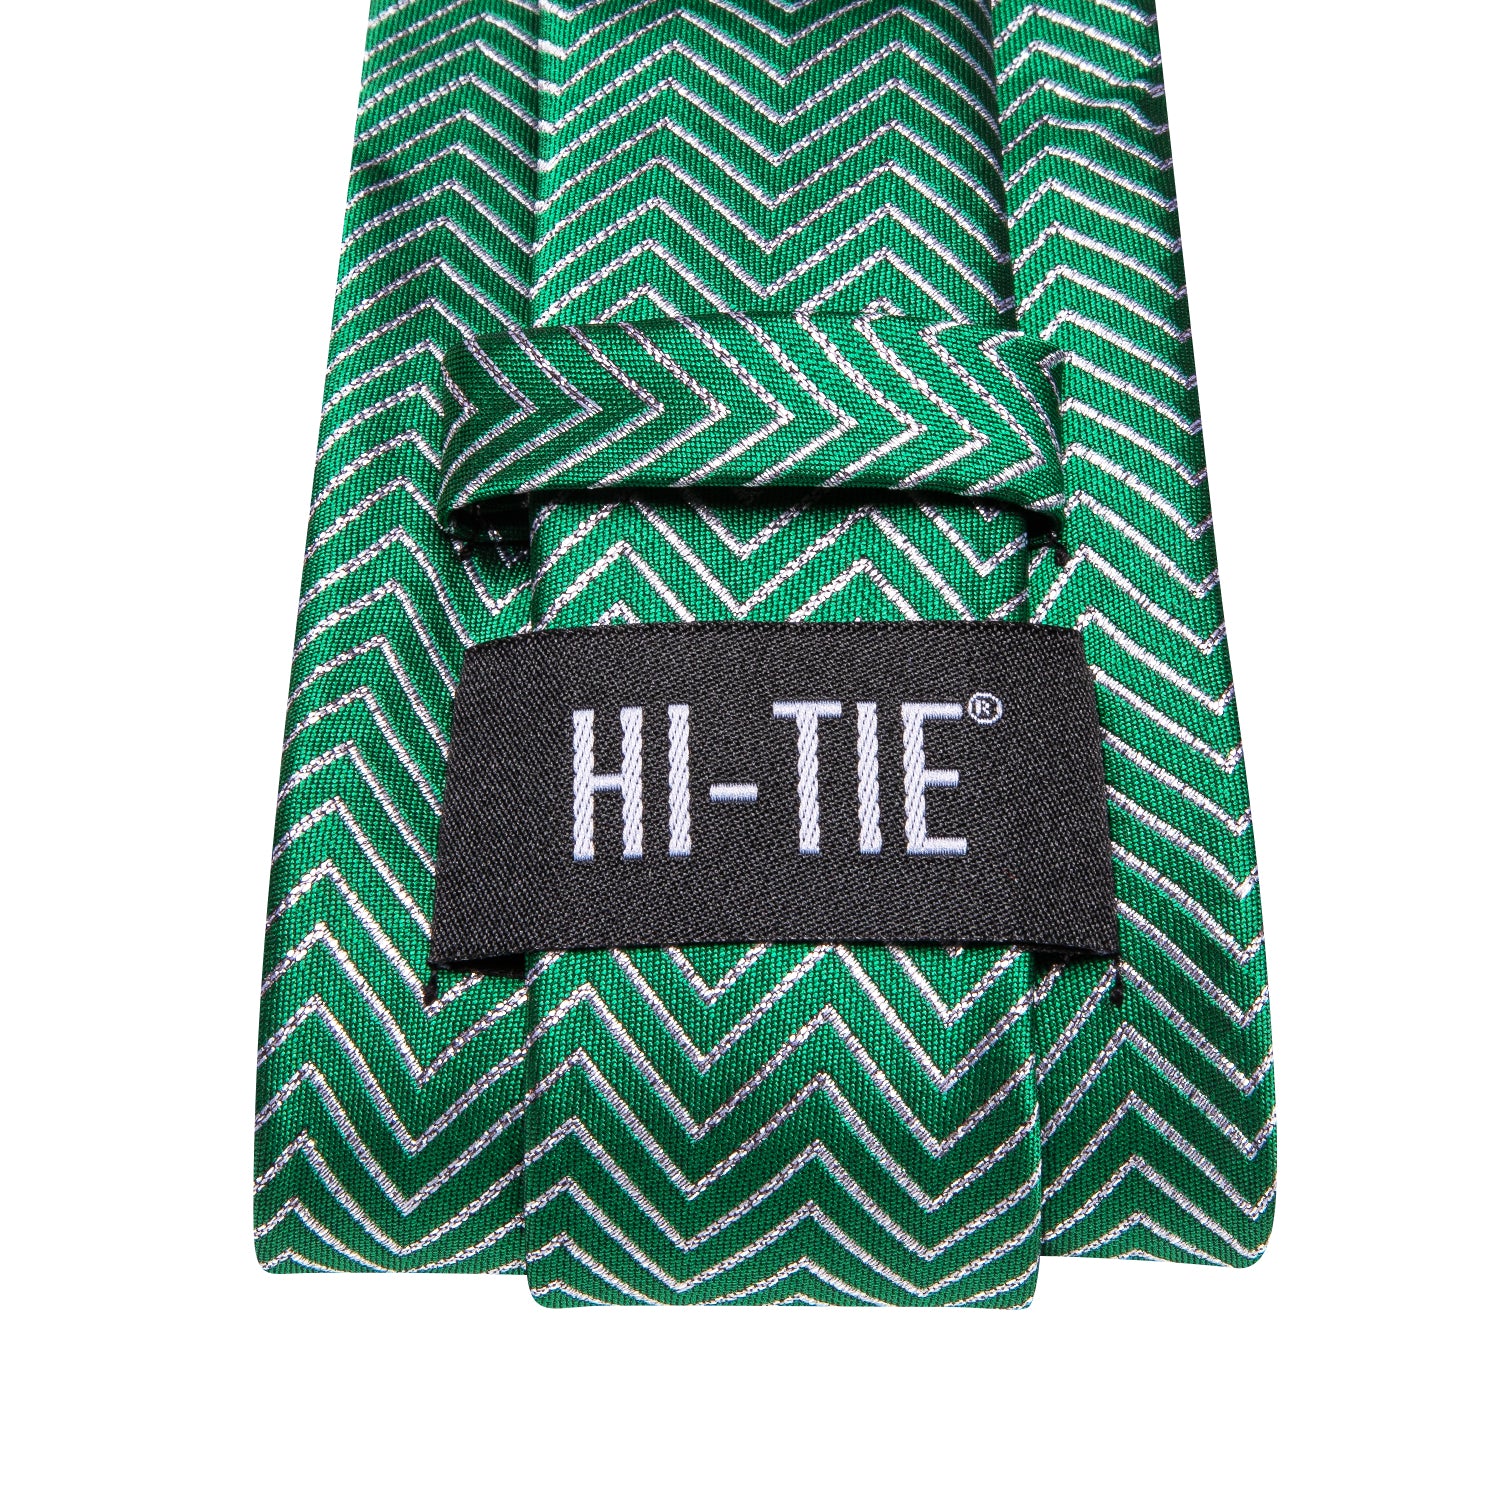 Christmas Green White Geometrical  Men's Tie Pocket Square Cufflinks Set